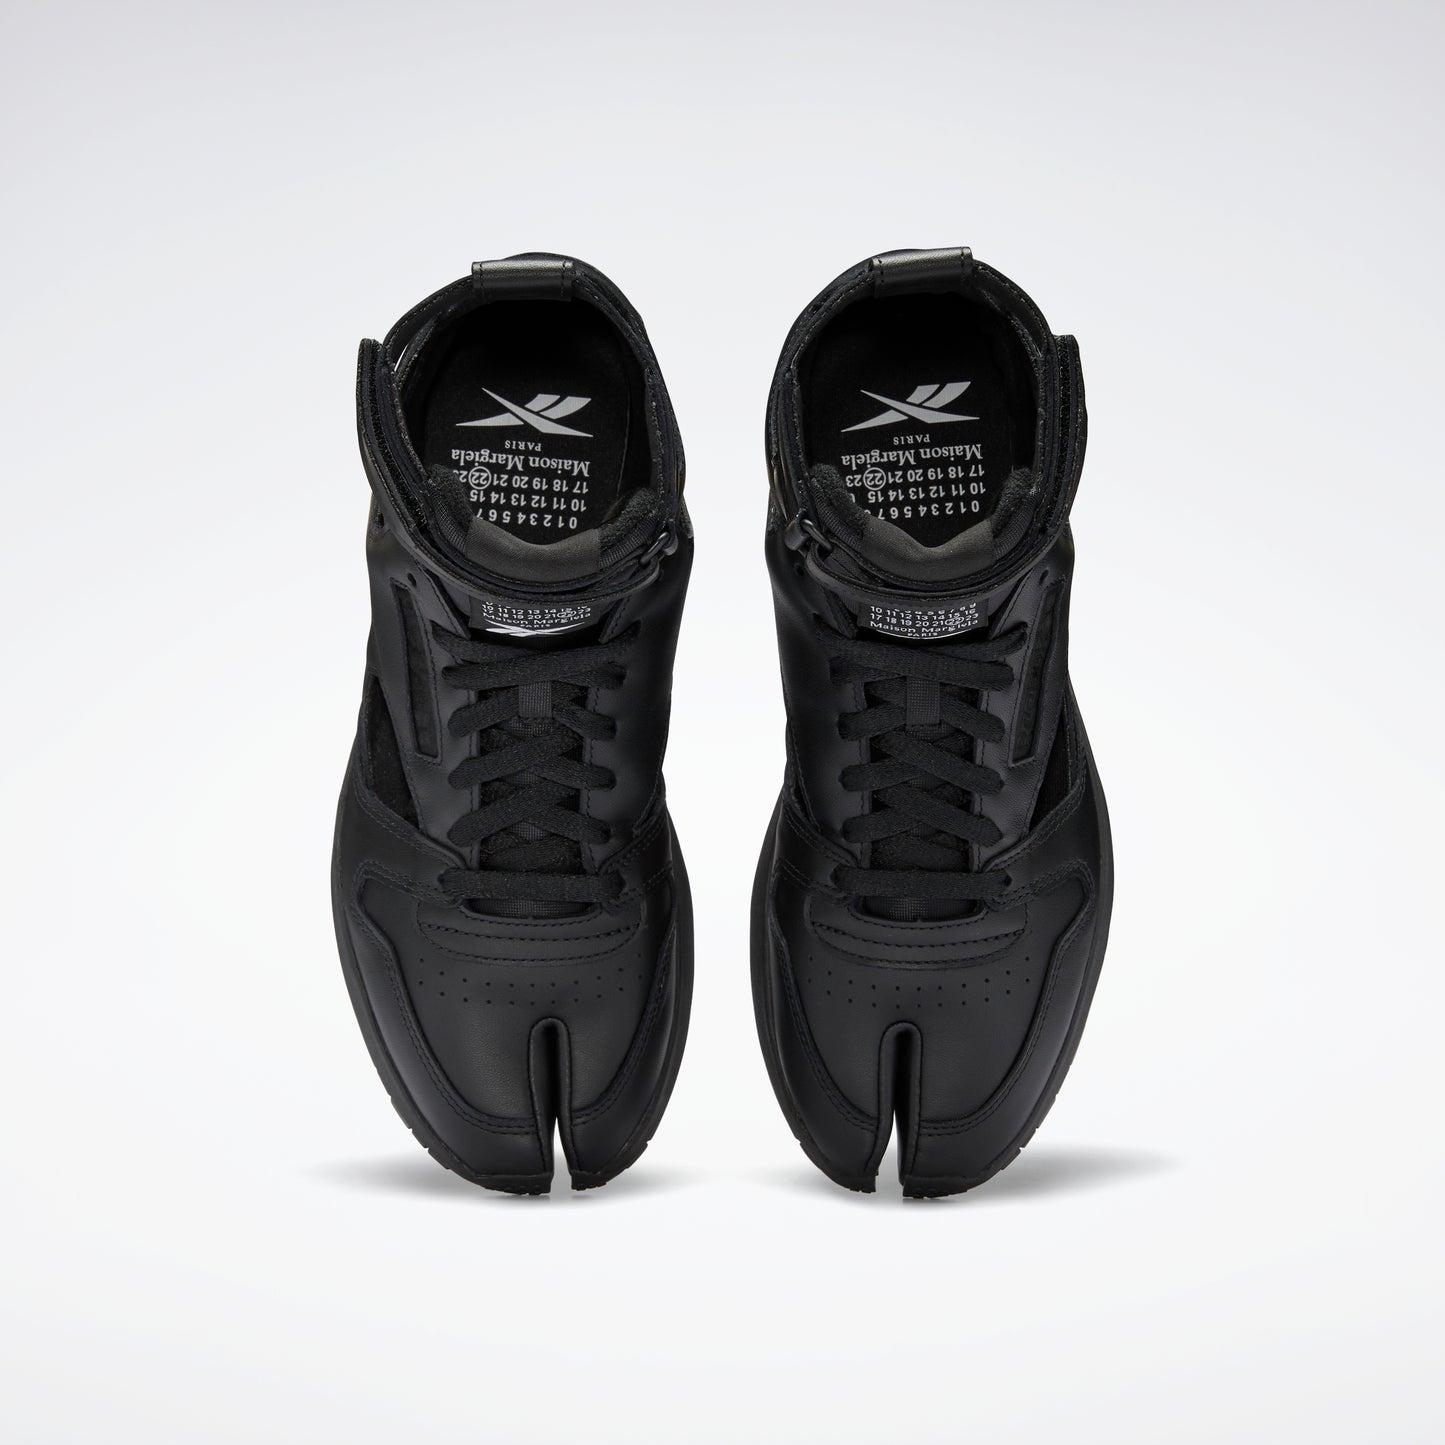 Chaussures Reebok Footwear Hommes Maison Margiela Classic Cuir Tabi Chaussures hautes Noir/Blanc/Noir